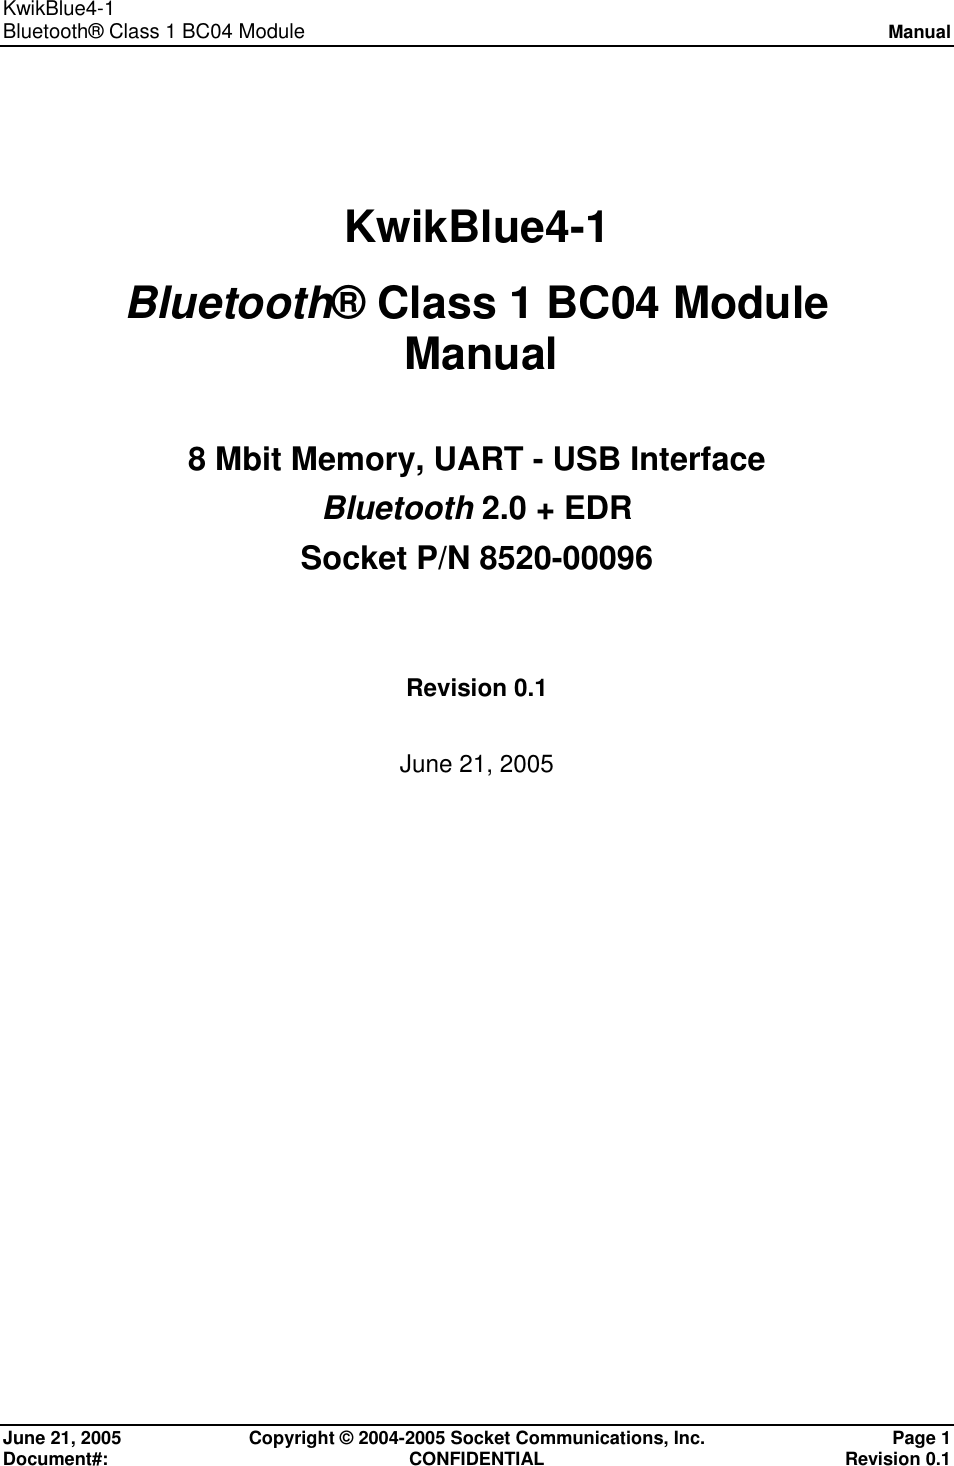 KwikBlue4-1  Bluetooth® Class 1 BC04 Module Manual  June 21, 2005  Copyright © 2004-2005 Socket Communications, Inc.  Page 1 Document#: CONFIDENTIAL Revision 0.1 KwikBlue4-1  Bluetooth® Class 1 BC04 Module   Manual 8 Mbit Memory, UART - USB Interface Bluetooth 2.0 + EDR Socket P/N 8520-00096 Revision 0.1 June 21, 2005  